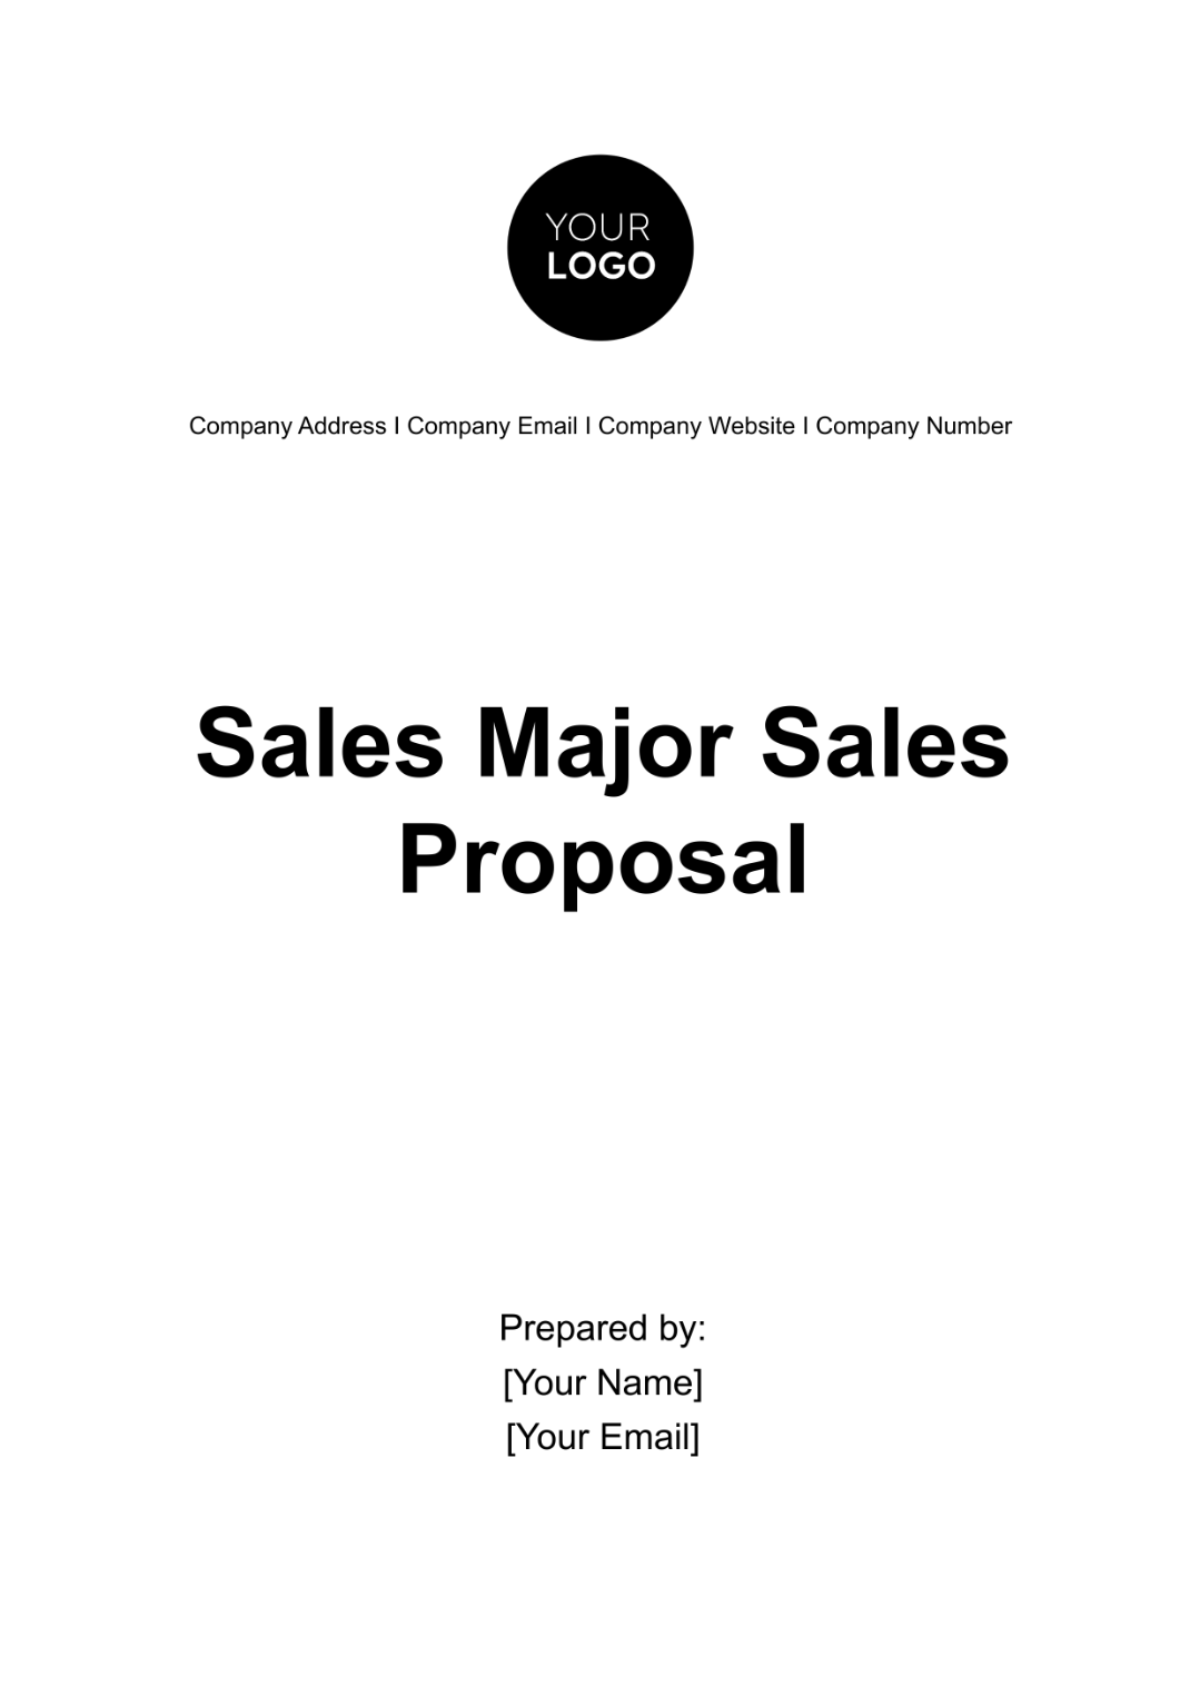 Sales Major Sales Proposal Template